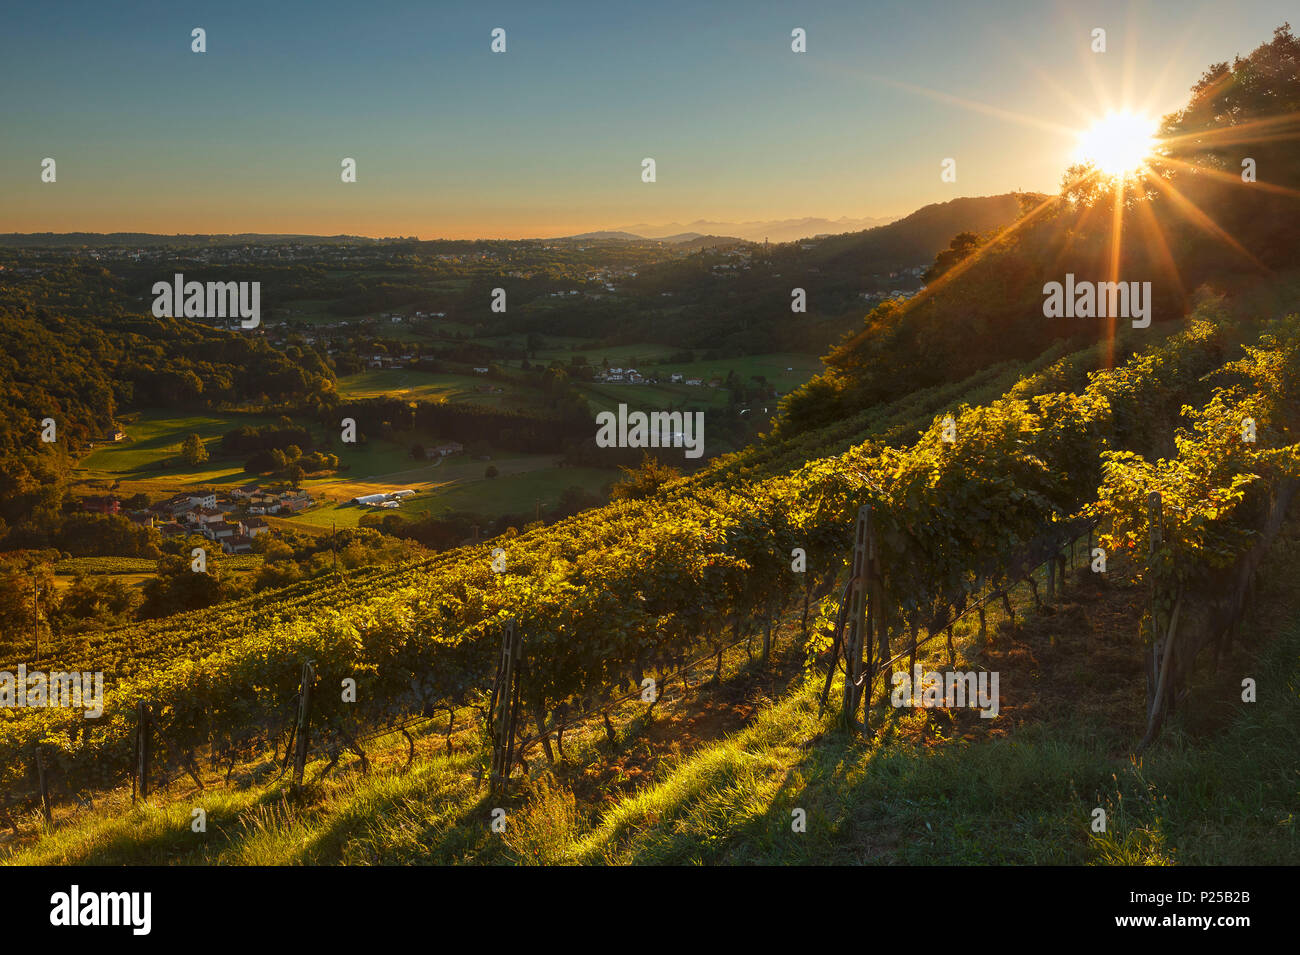 Sunset on the vineyards that produce Merlot wine, Pedrinate, Mendrisio district, Canton of Ticino, Switzerland, Europe Stock Photo